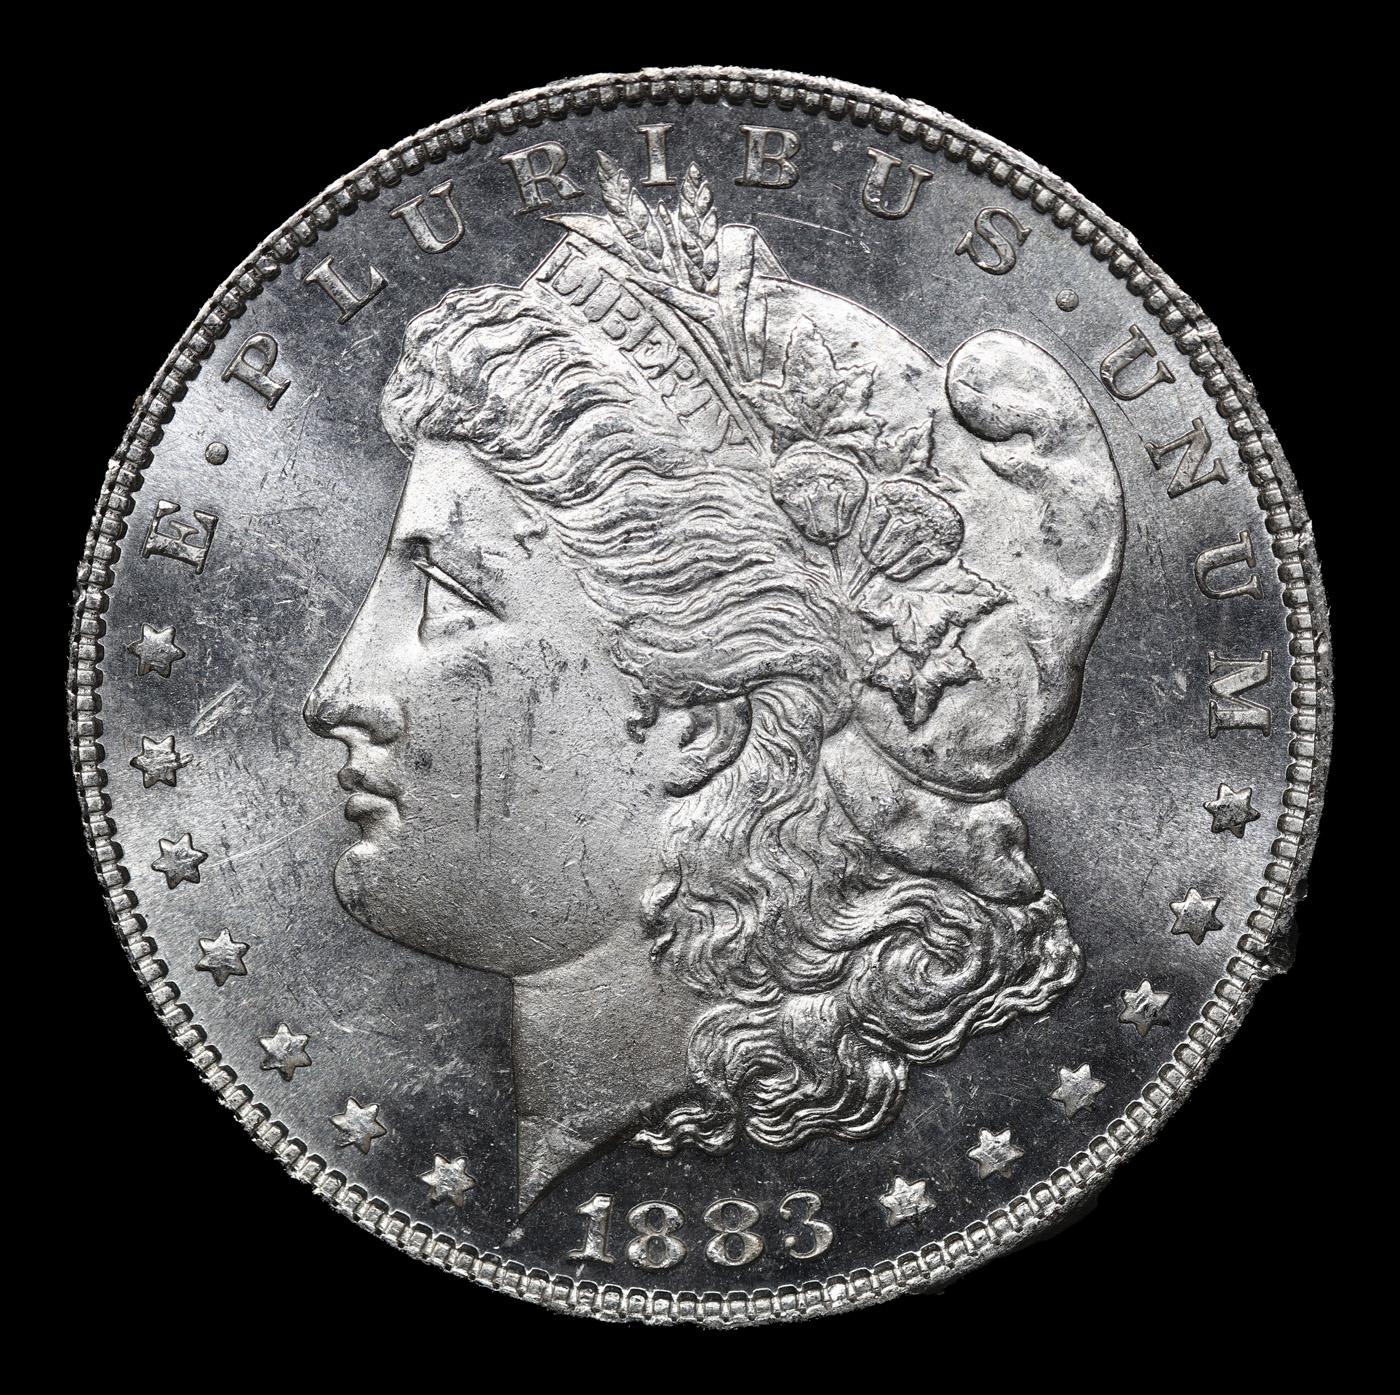 1883-p Morgan Dollar $1 Grades Choice Unc+ PL